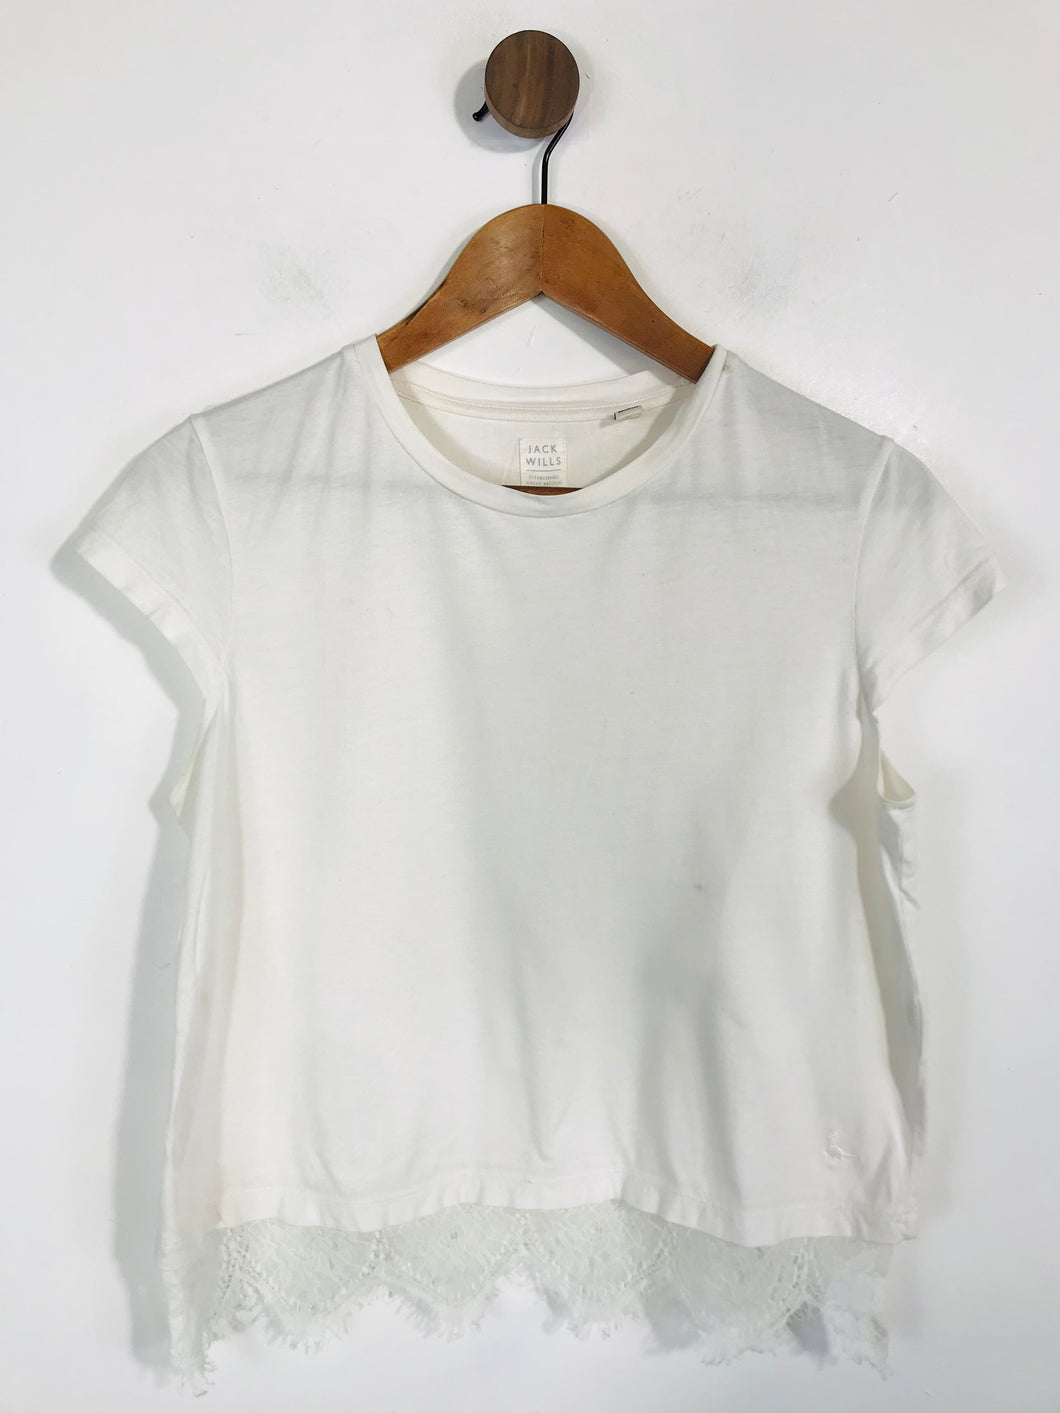 Jack Wills Women's Lace Trim T-Shirt | UK8 | White